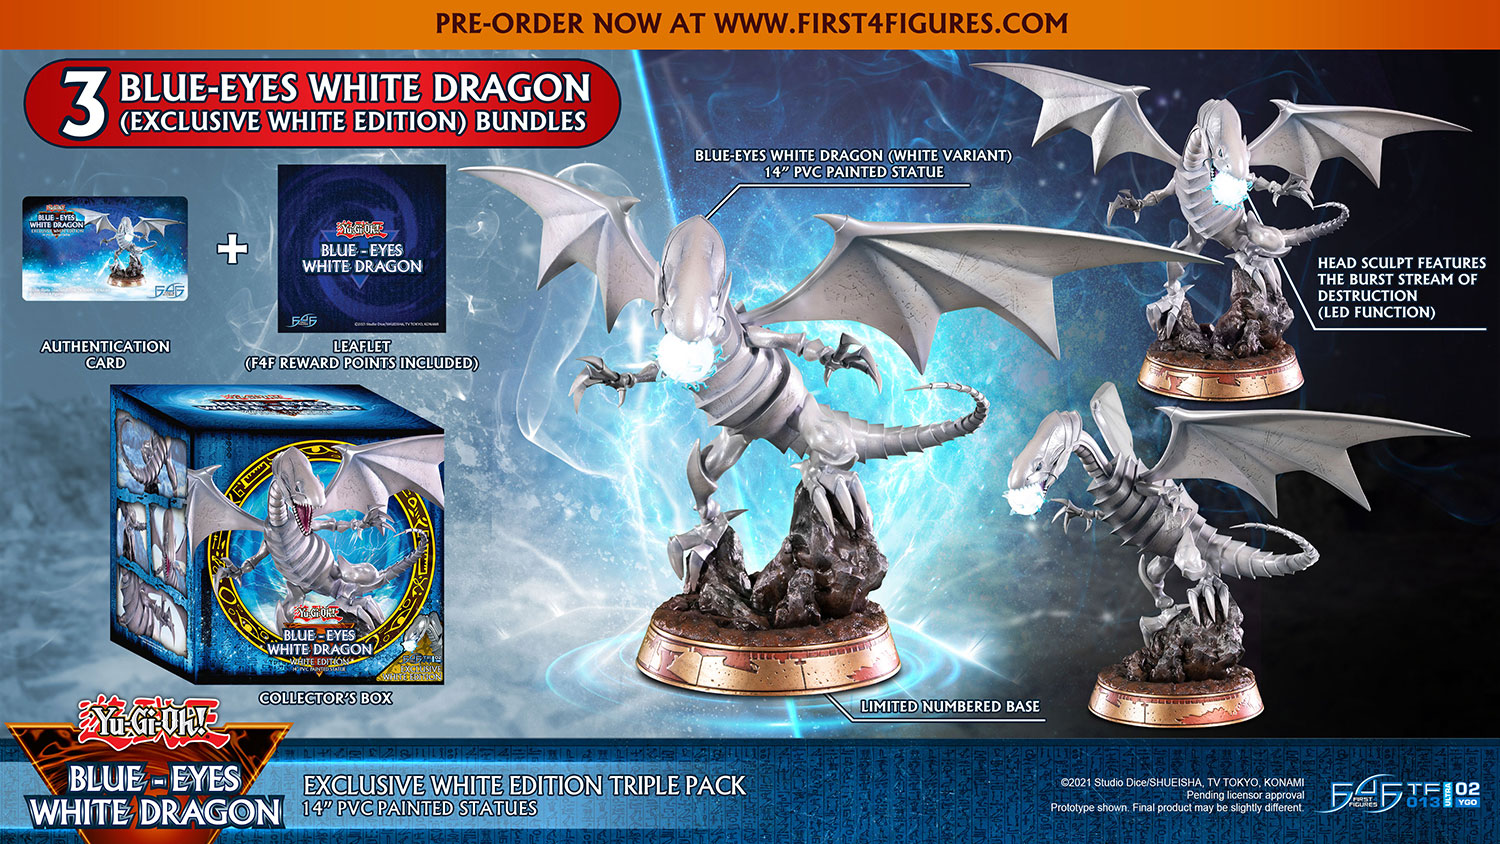 Blue-Eyes White Dragon (Exclusive White Edition Triple Pack)